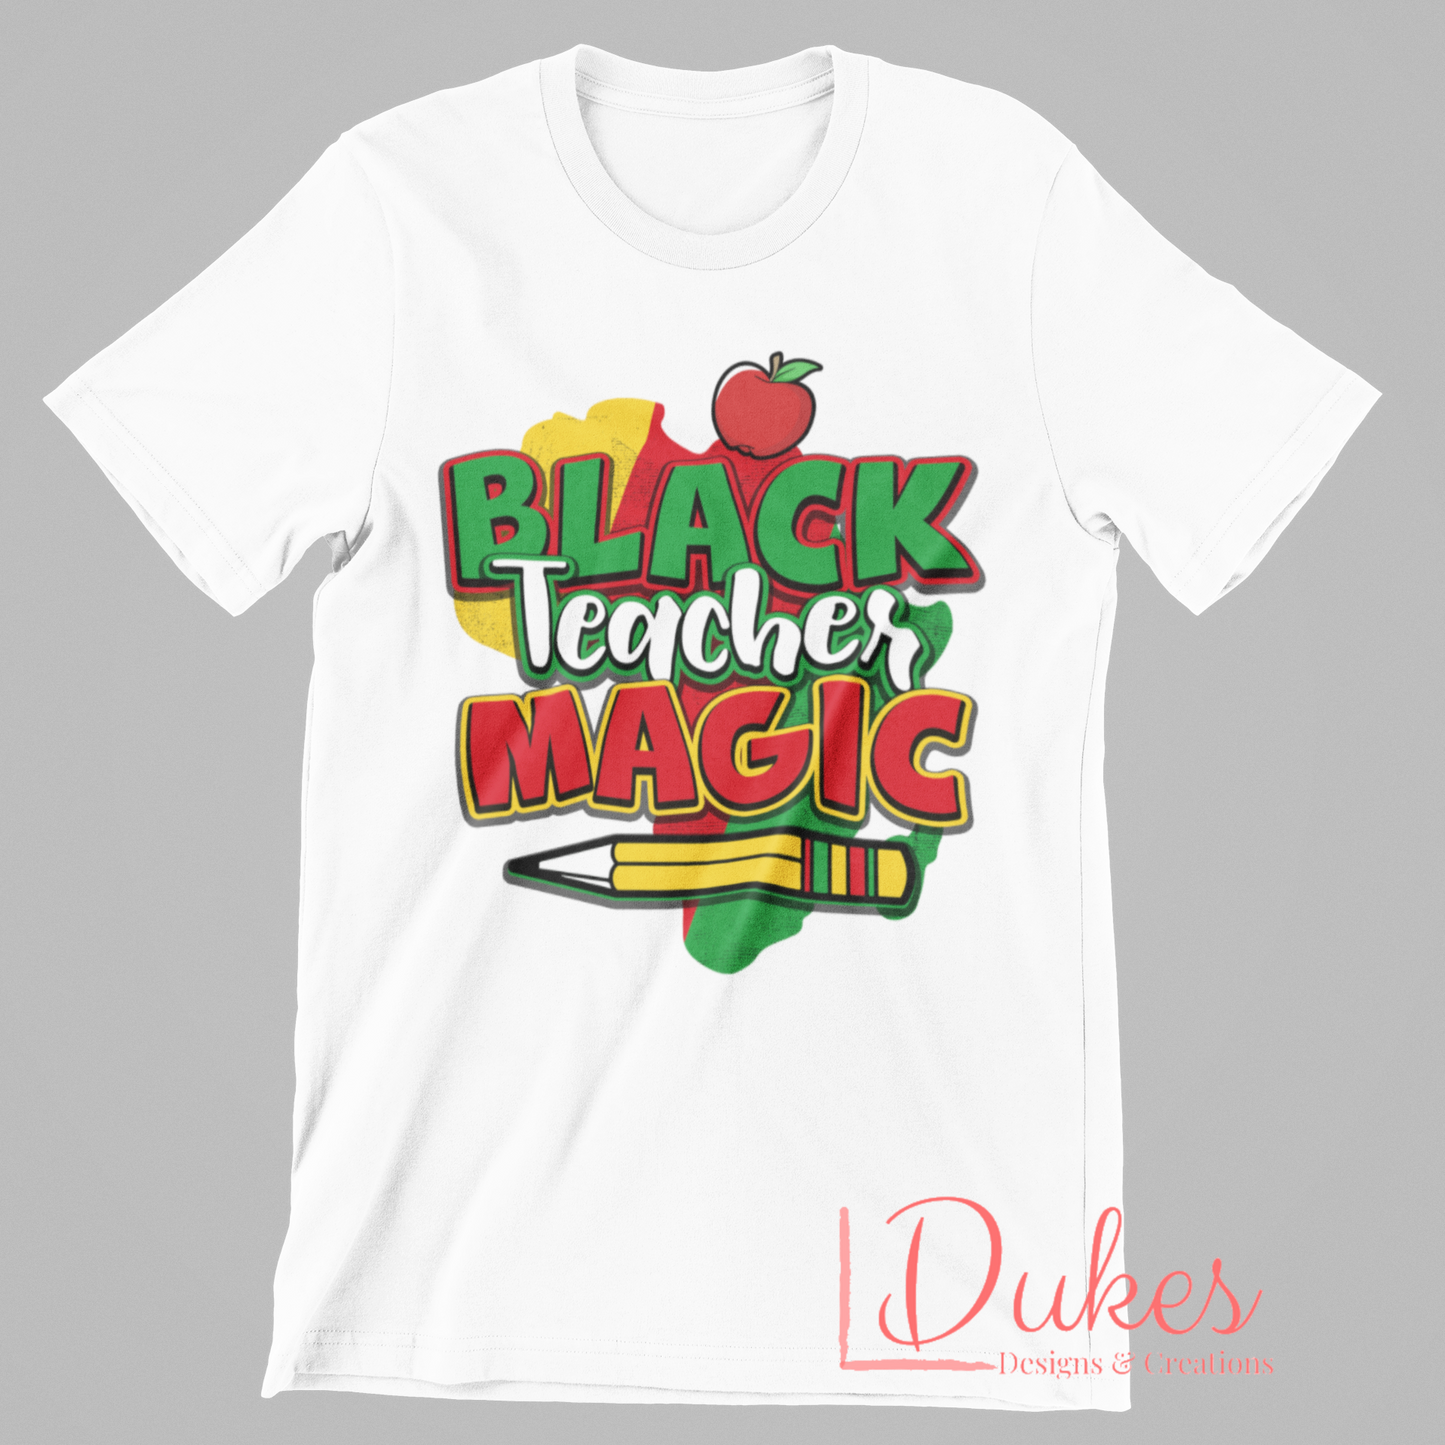 Black Teacher Magic Tee